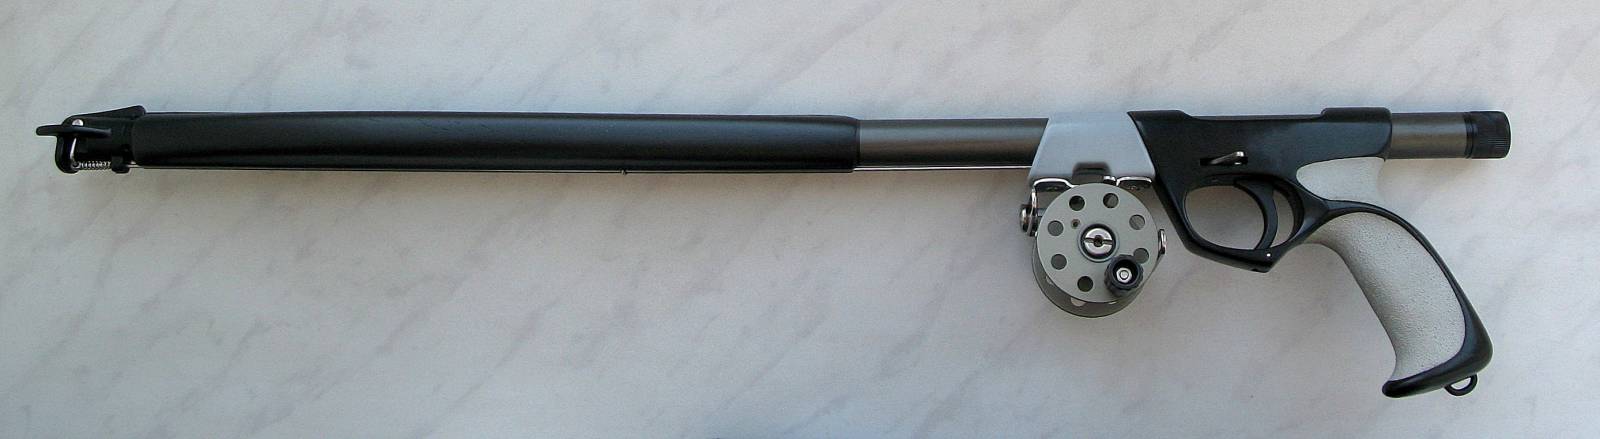 Mavka gun with reel.jpg